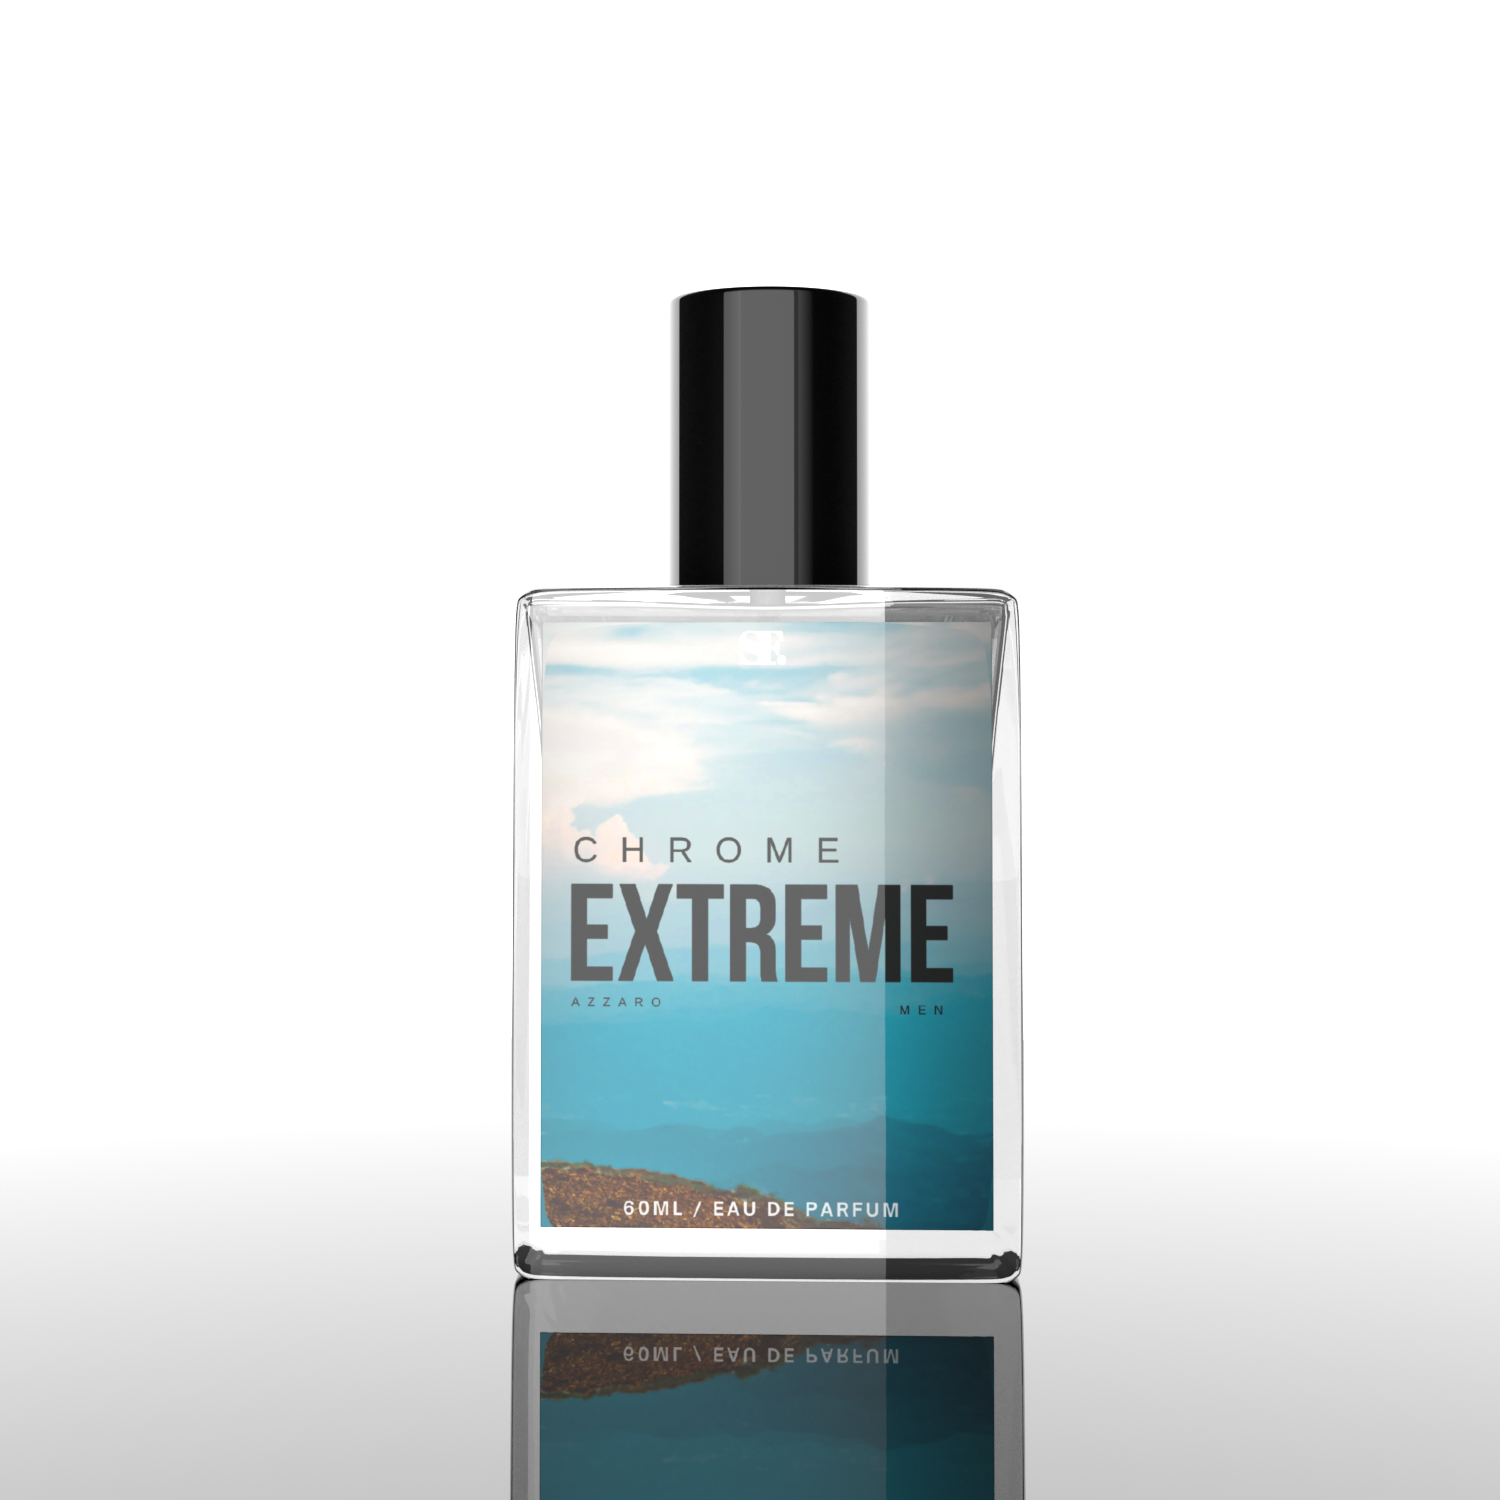 Azzaro Chrome Extreme Eau de Parfum 50ml Spray